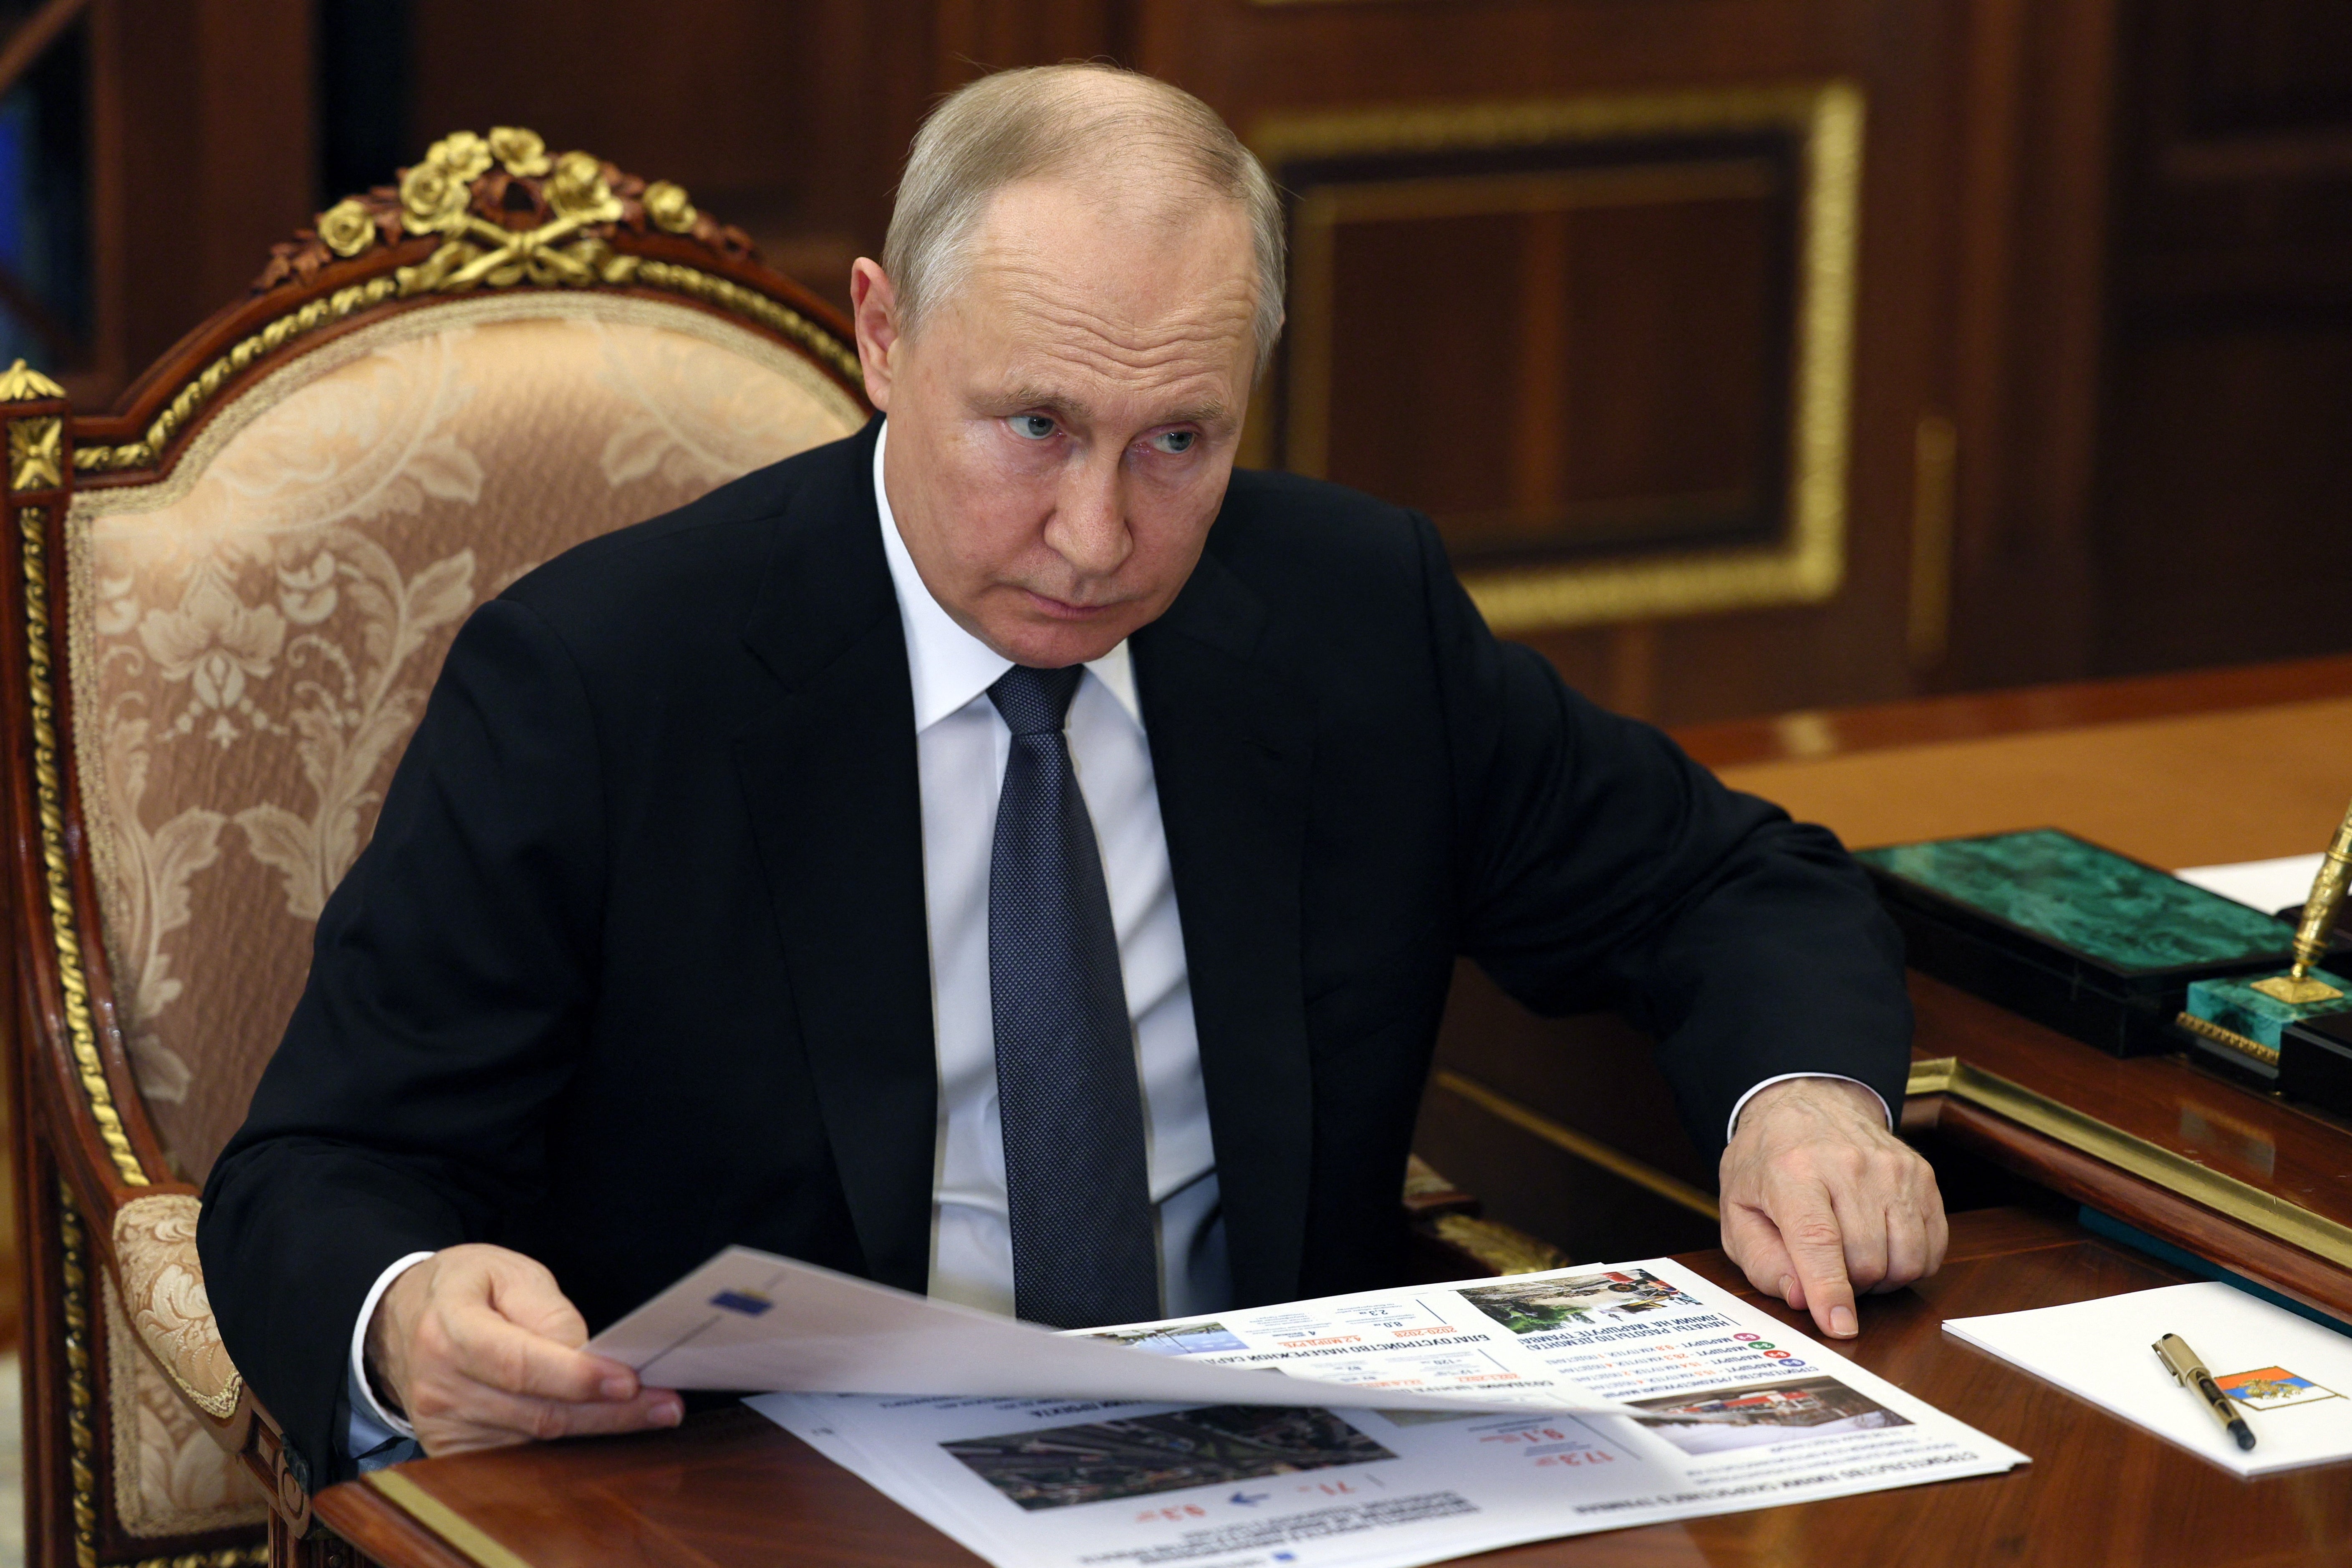 Vladimir Putin during a meeting in the Kremlin on Tuesday